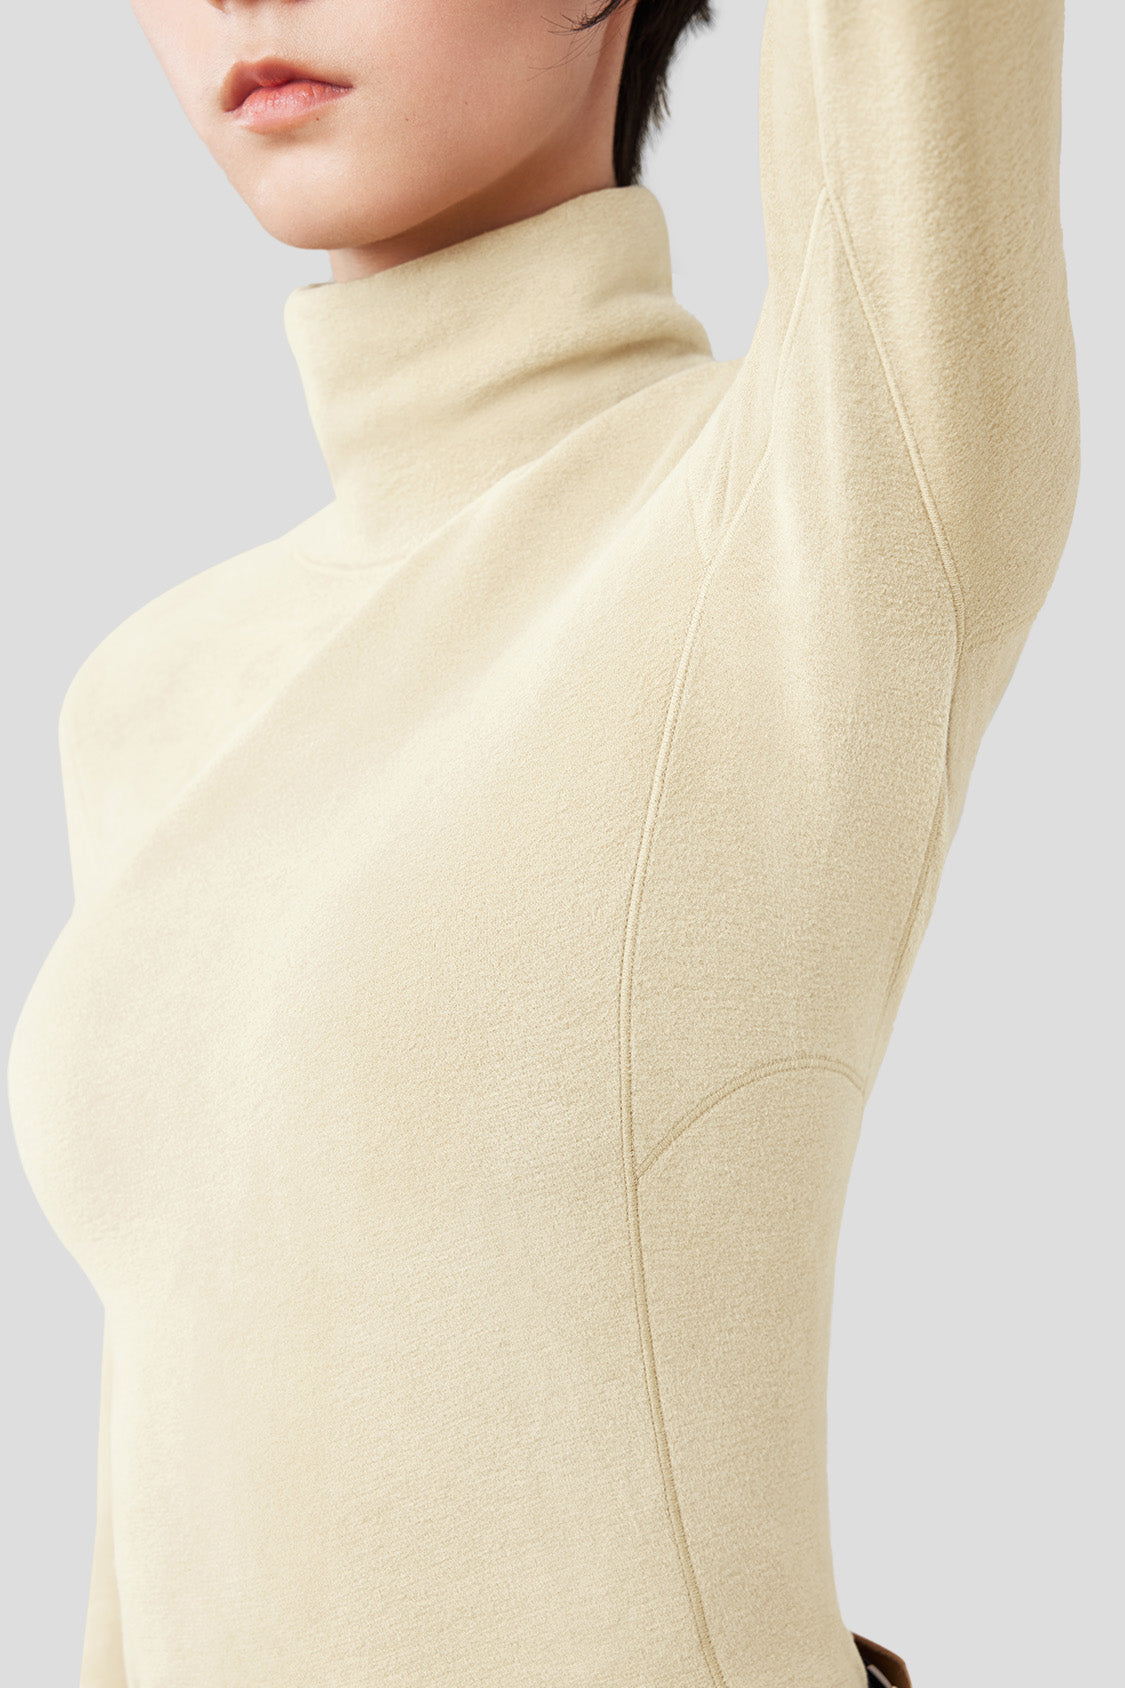 【New In】Women's Warm High-Neck Fleece Baselayer